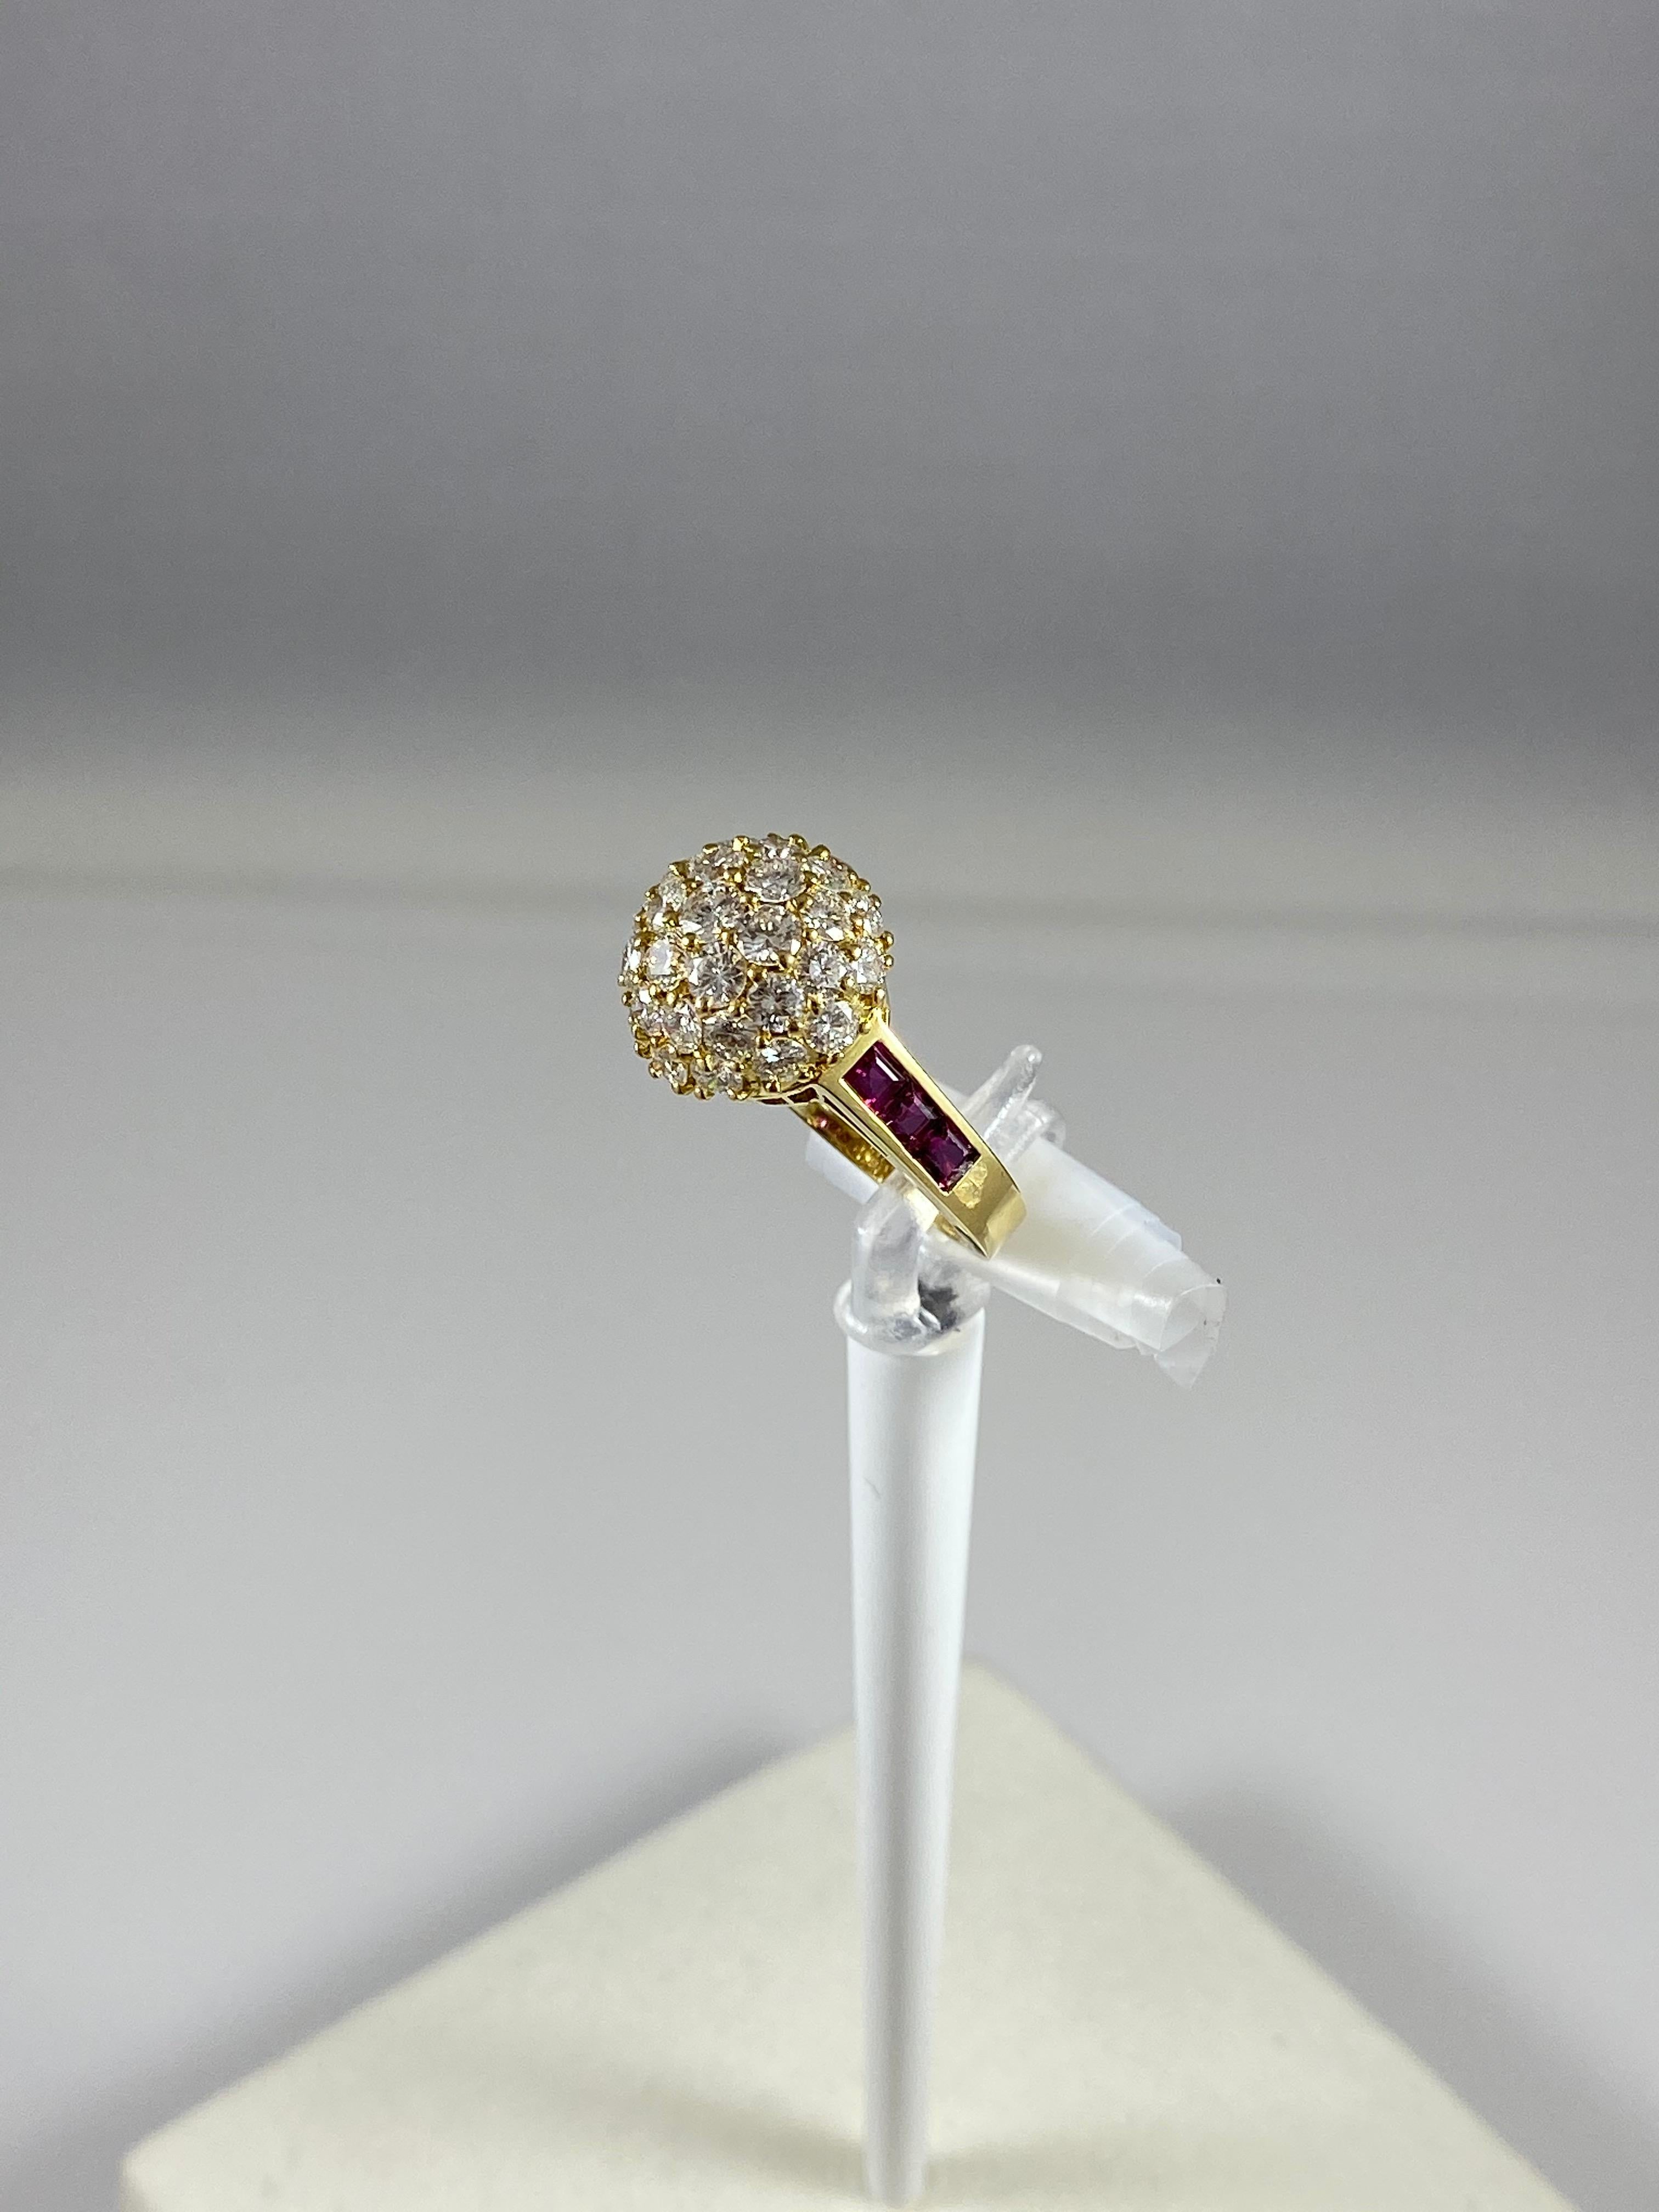 Hammerman Jewels 18 Karat Yellow Gold Diamond and Ruby Ring. 1.07 carats of rubies, 2.43 carats of diamonds. Size 5.5.